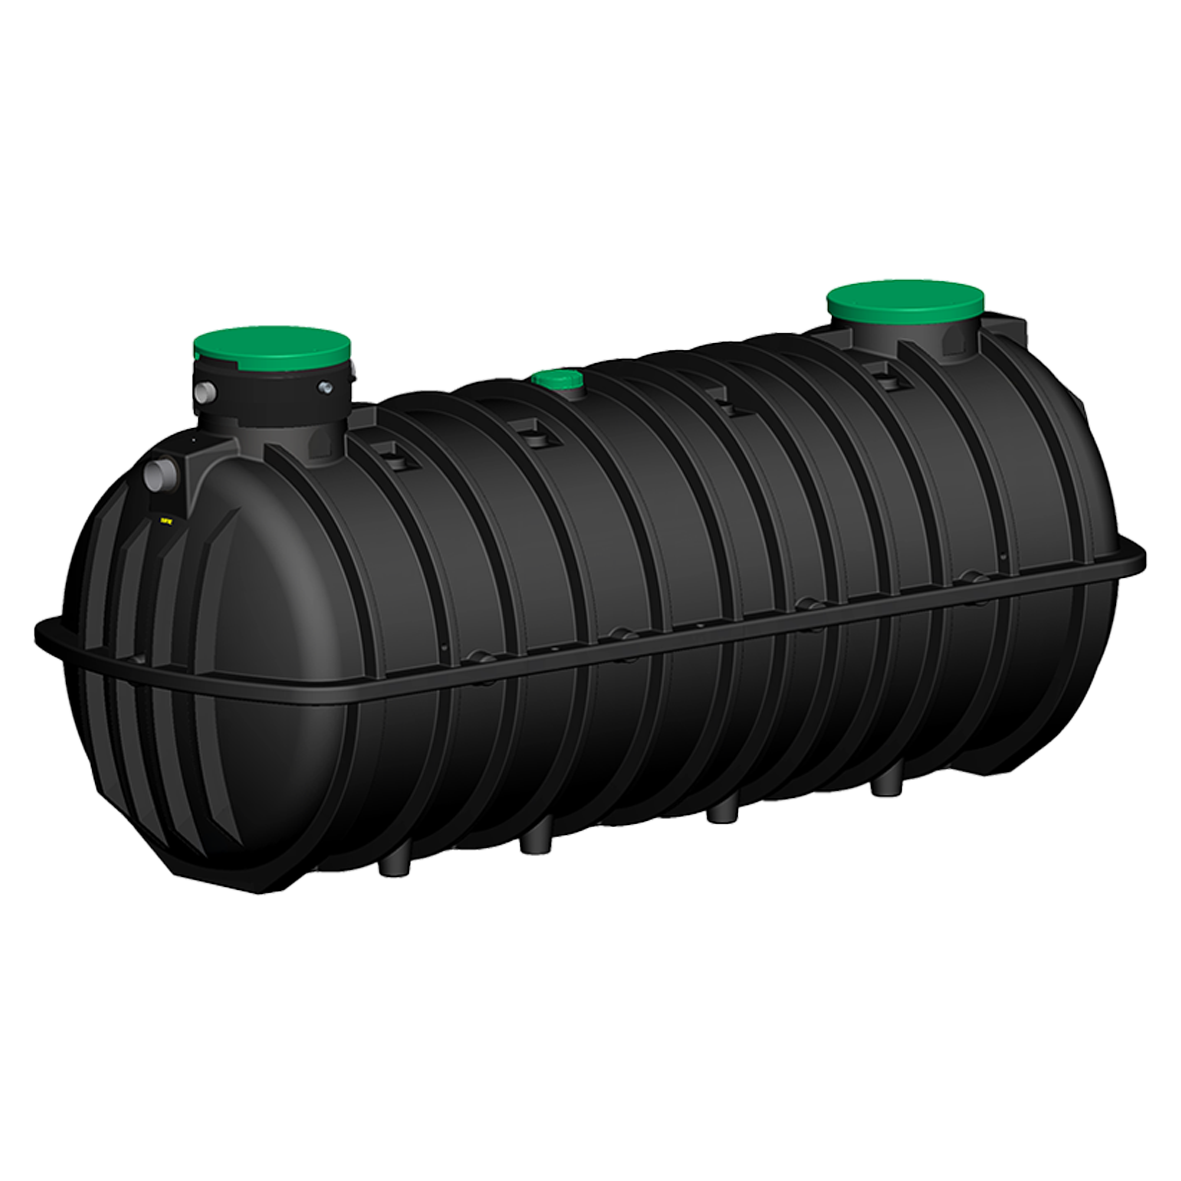 [6328] AQUAMOP Rainwater tank 10 to 20 m3 - Main image